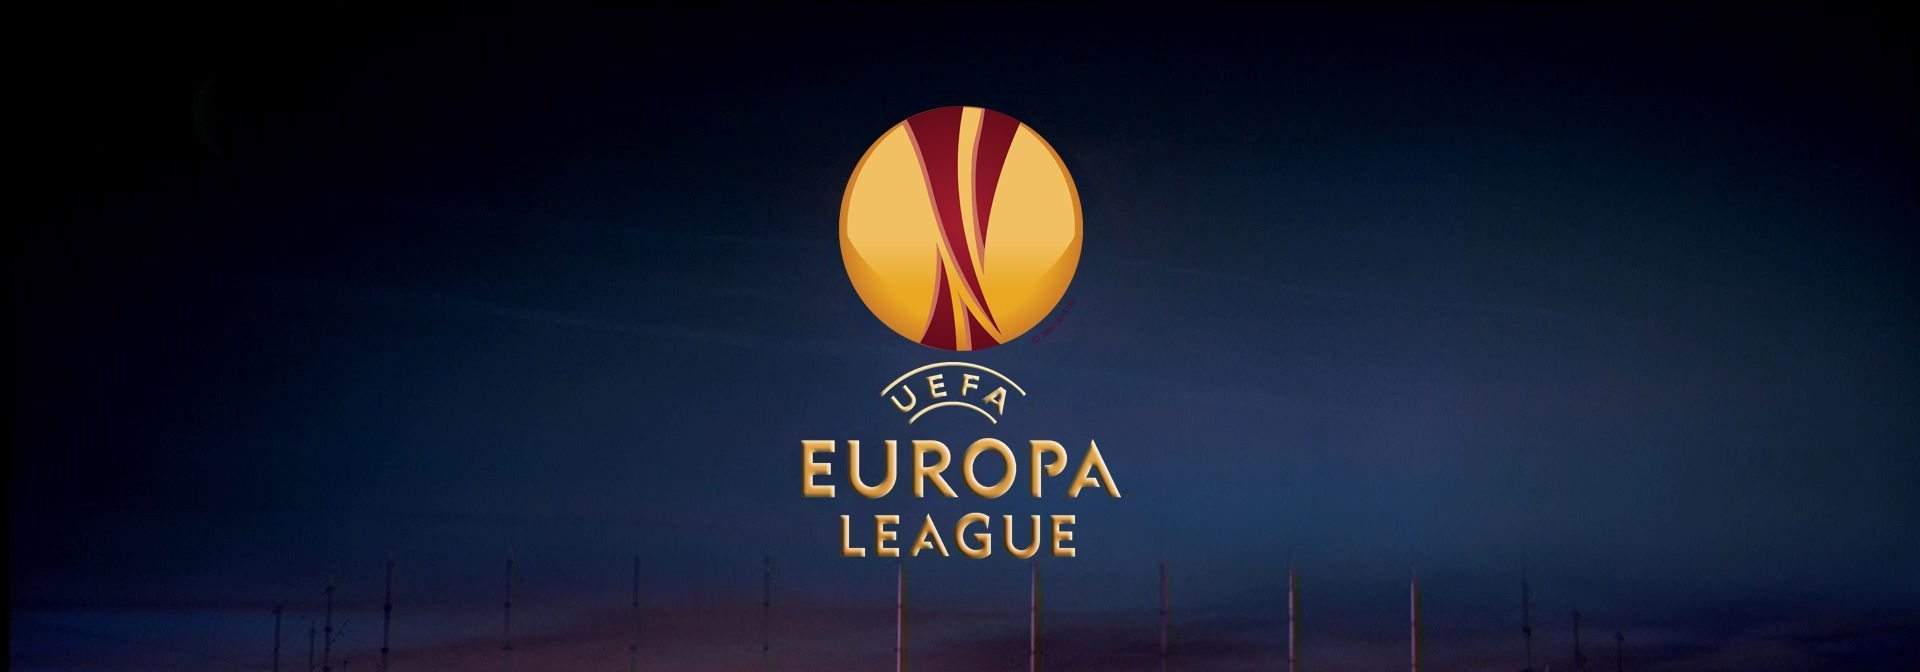 Europa League: Δείτε αναλυτικά τους ομίλους και τις βαθμολογίες των ομάδων